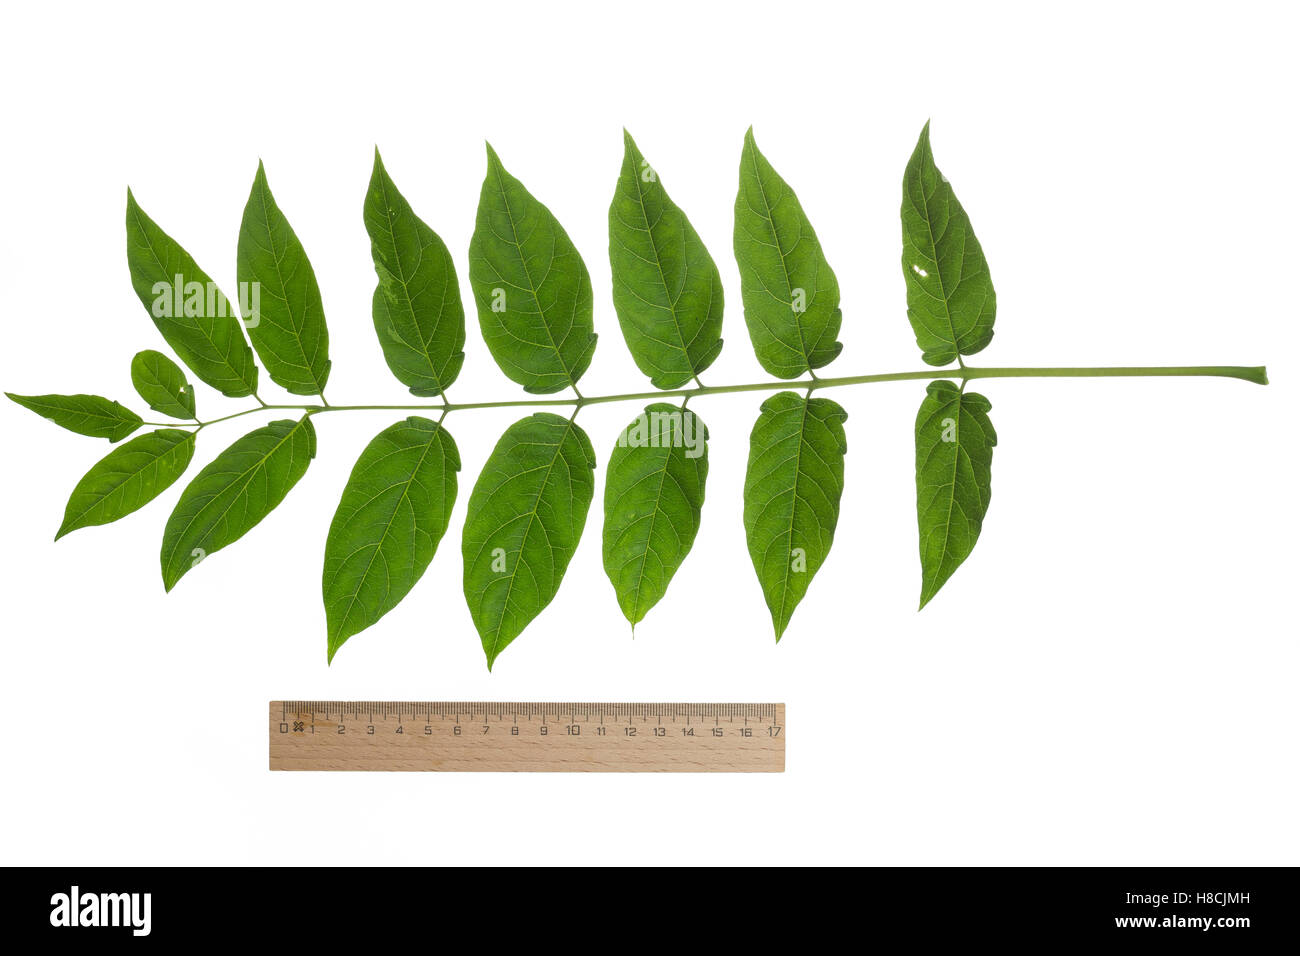 Götterbaum, Chinesischer Götterbaum, Ailanthus altissima, Ailanthus glandulosa, albero del cielo, ailanthus, chouchun, L'Ailante g Foto Stock